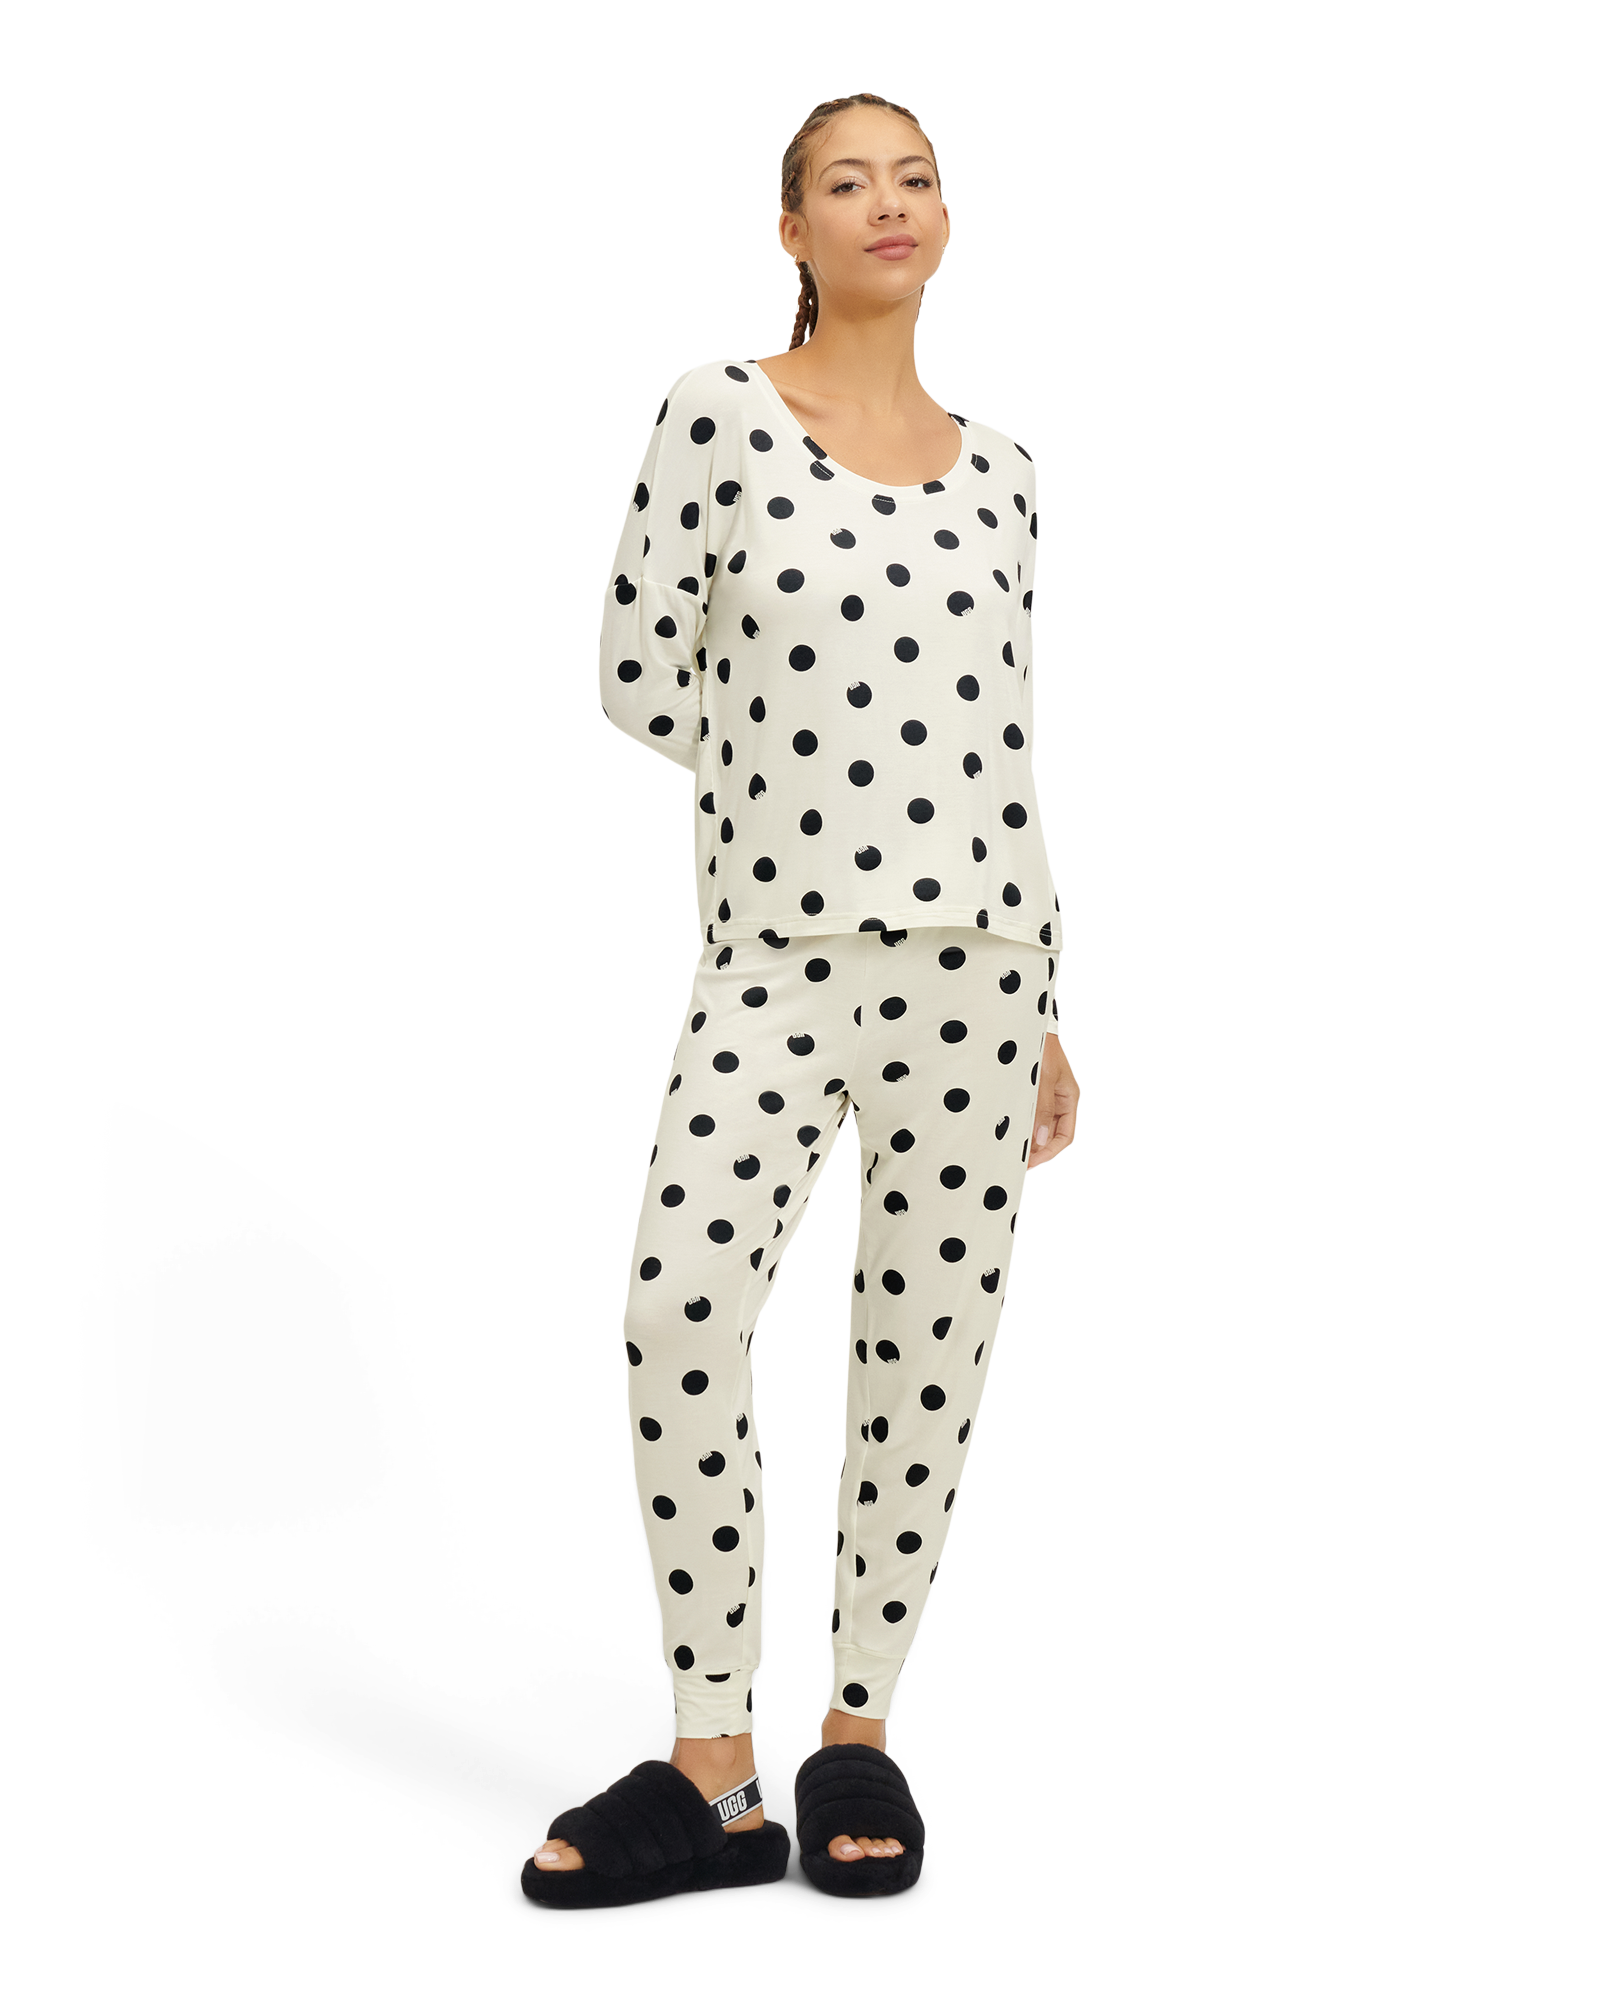 UGG Birgit Print Pyjama Set for Women in White/Black Dot, Size 2XL